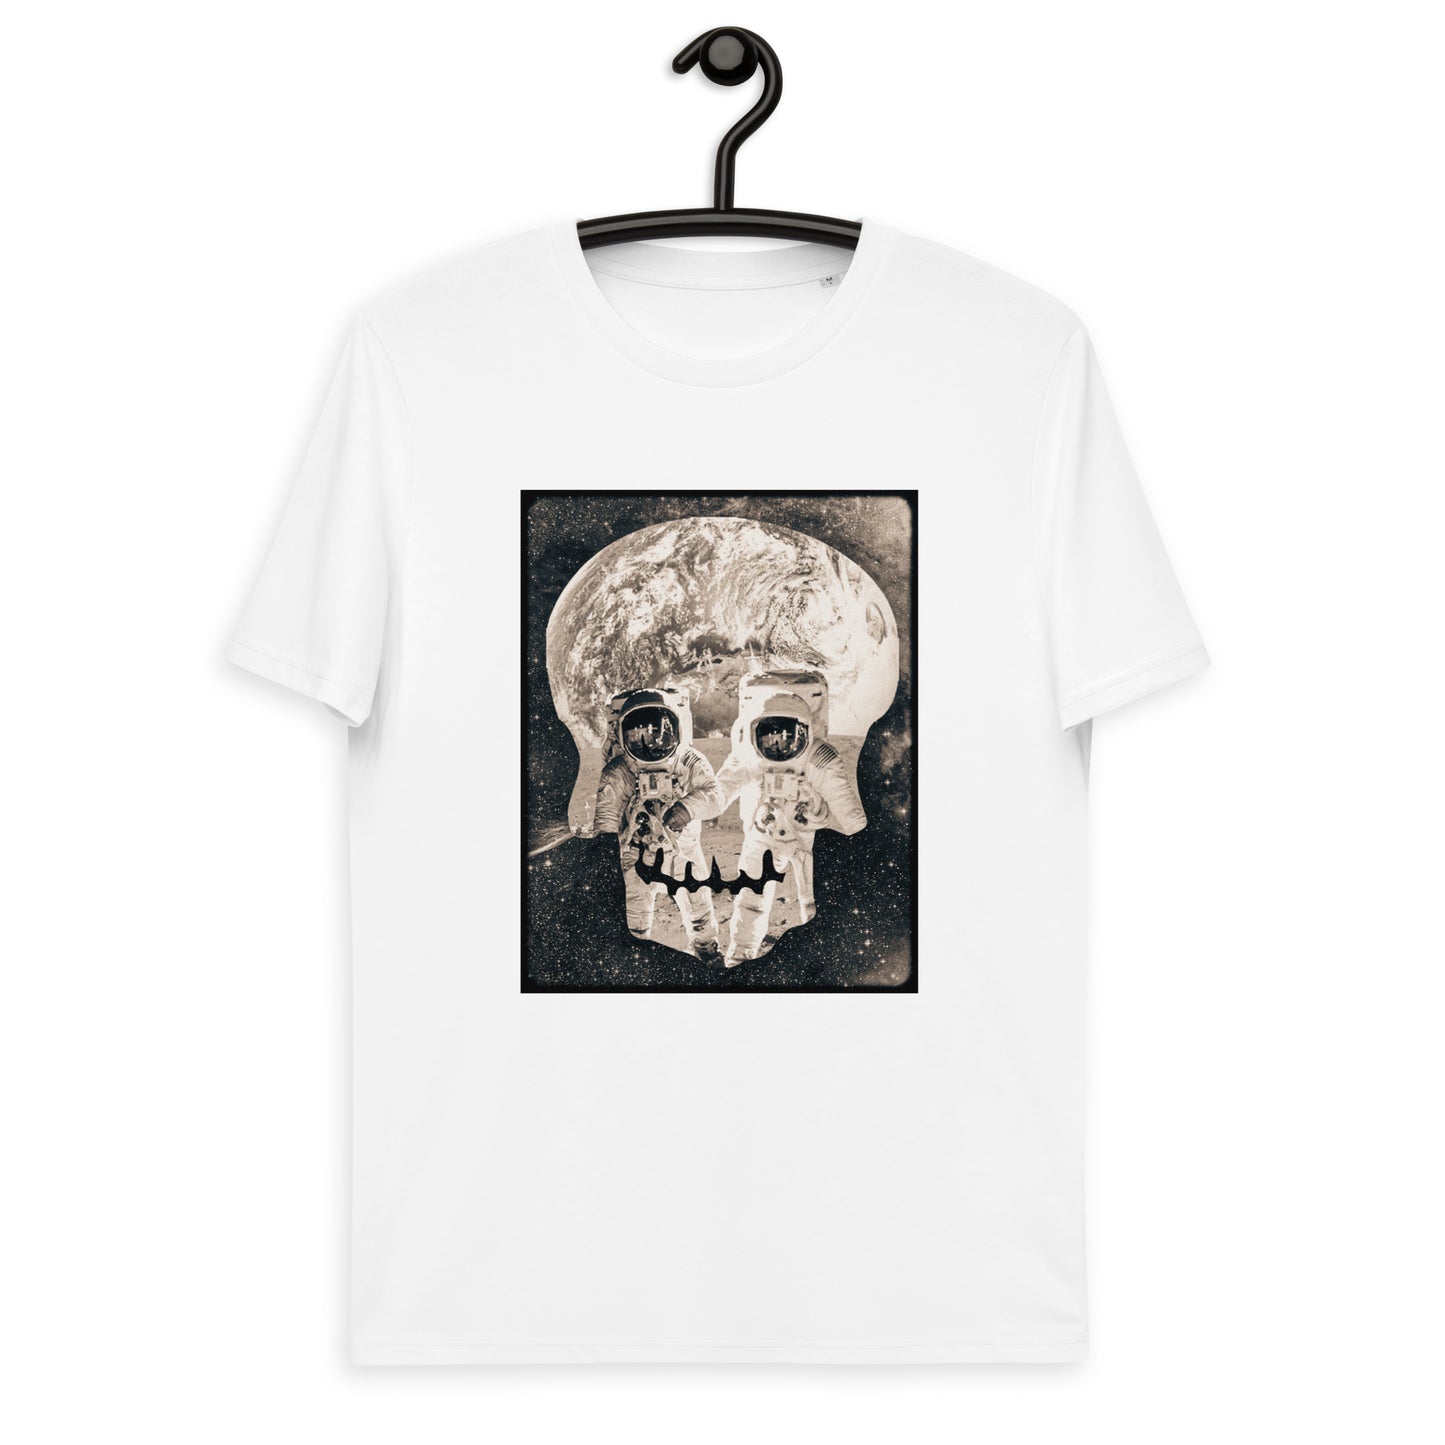 Astronaut Skull KiSS Unisex organic cotton t-shirt - Space Skulls Earth Moon